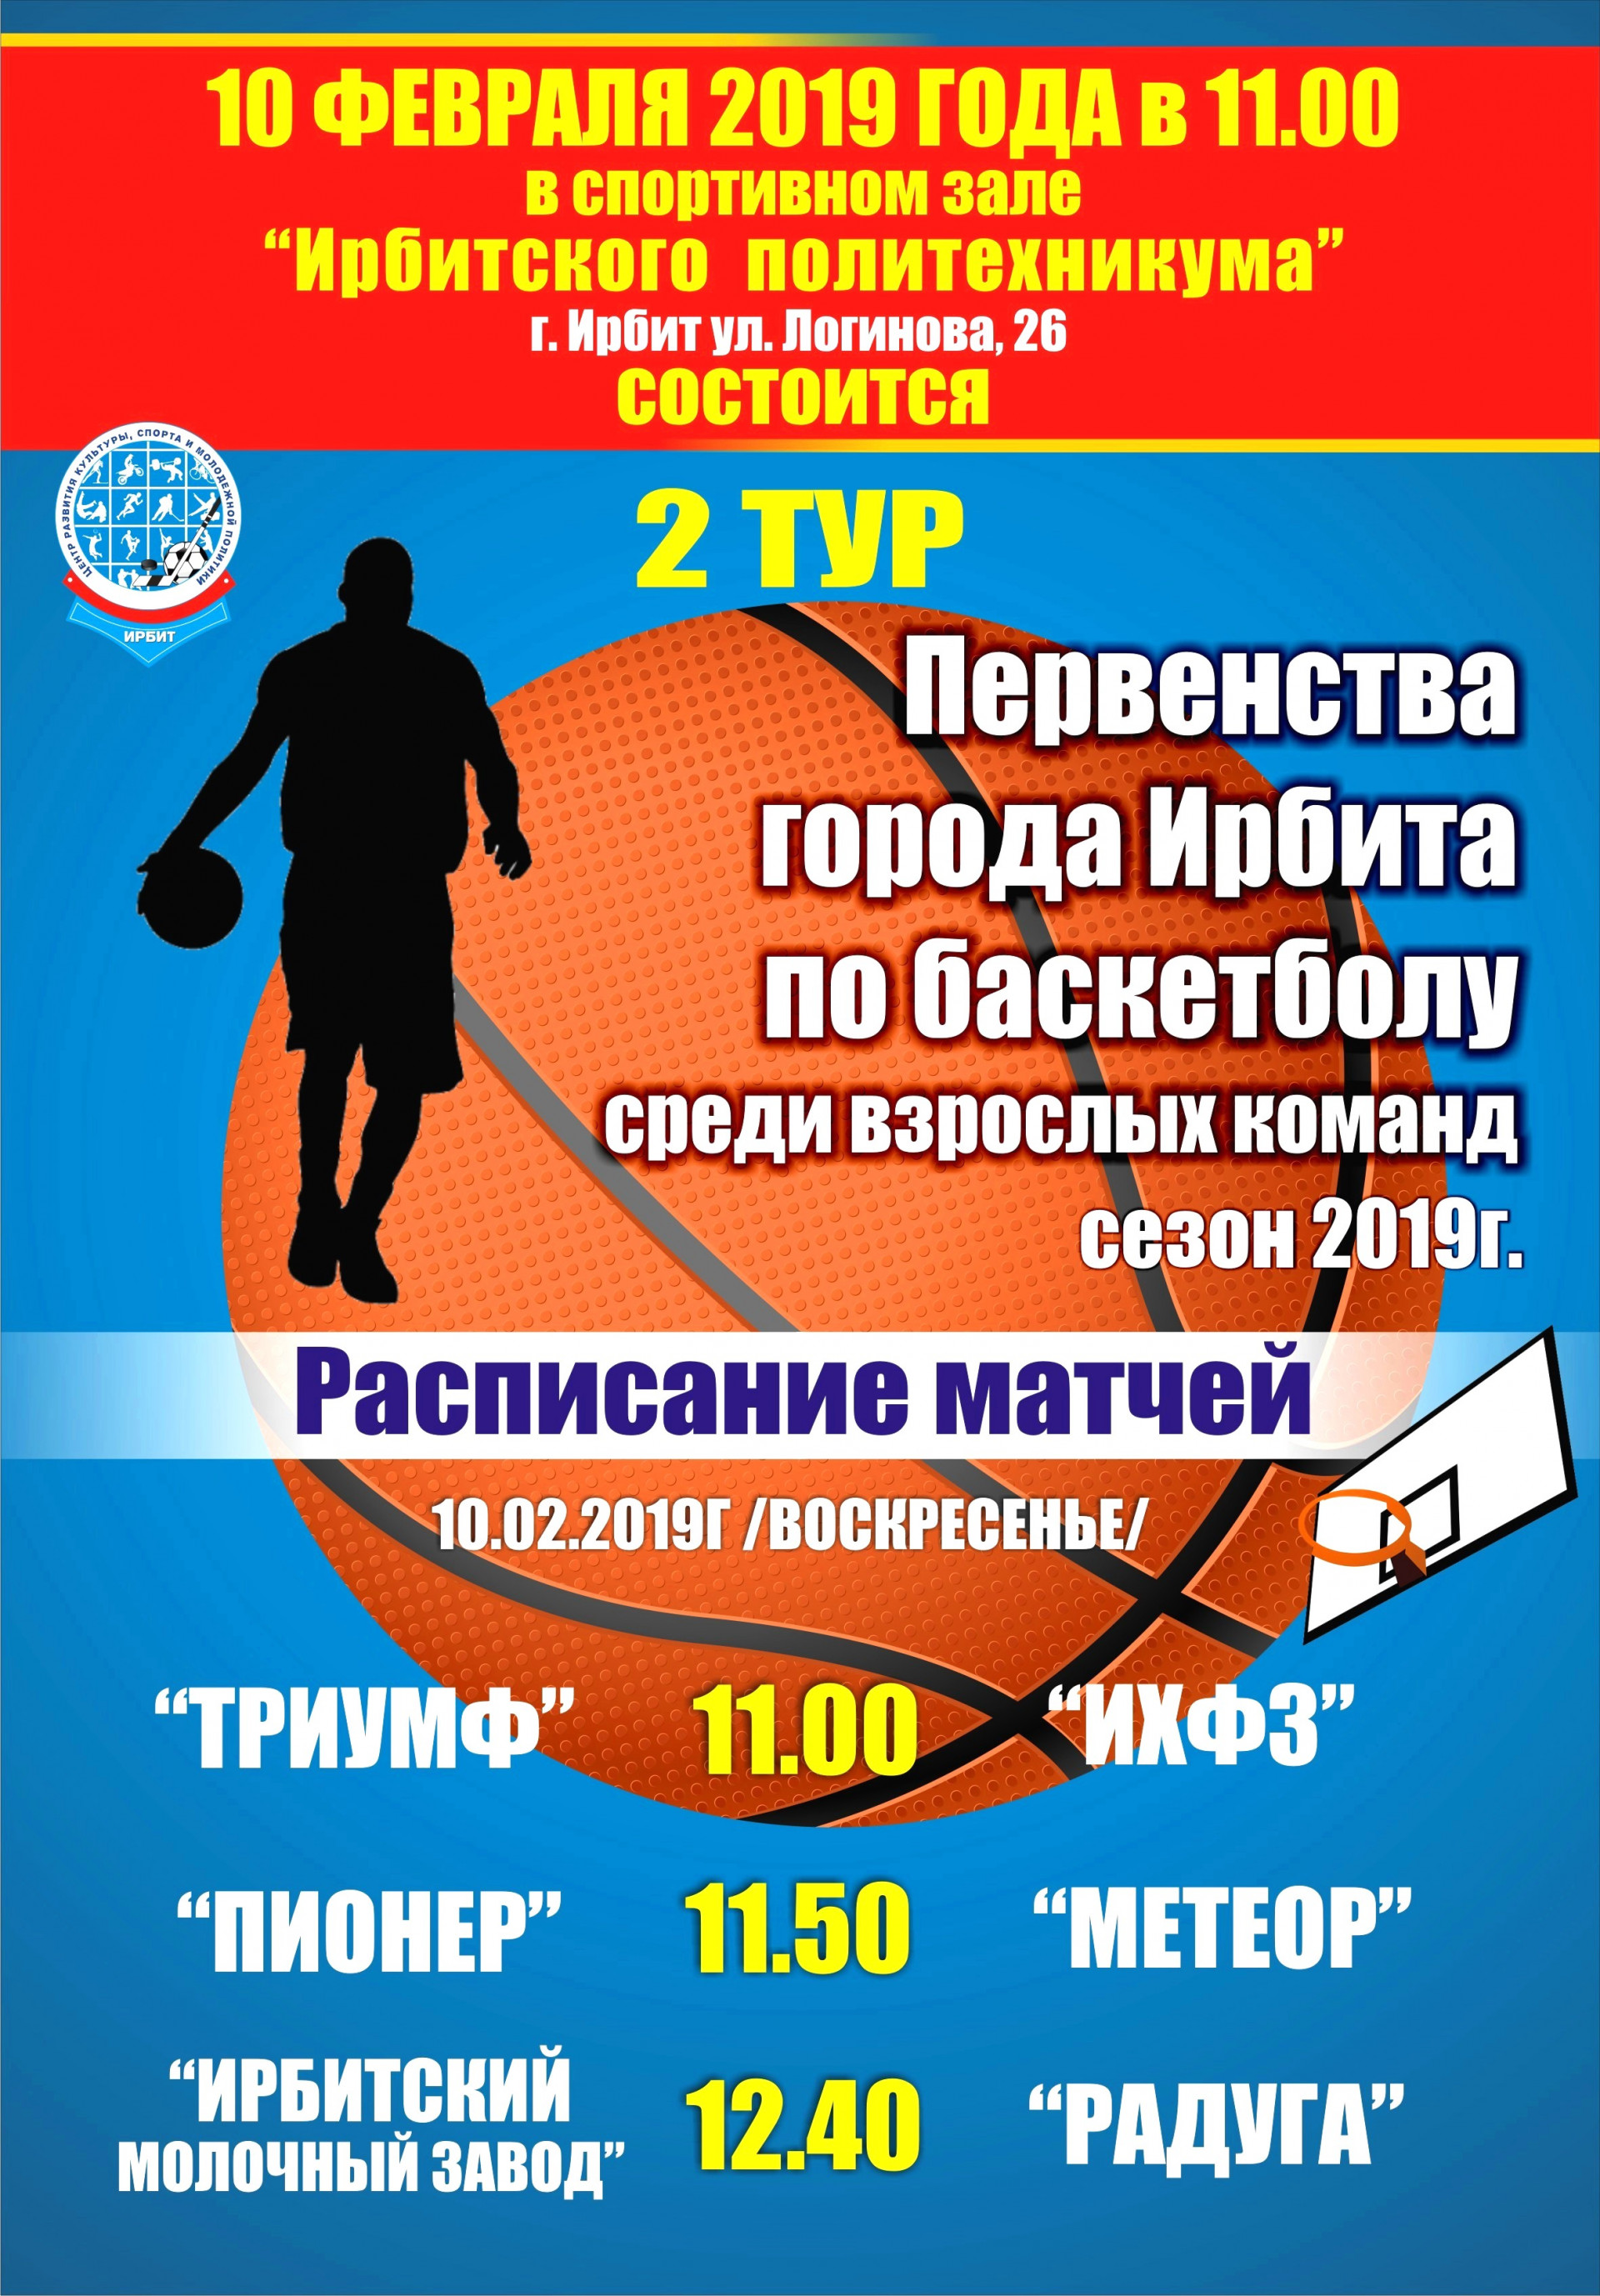 2 тур Первенства города Ирбита по баскетболу среди взрослых команд, сезон 2019 г.